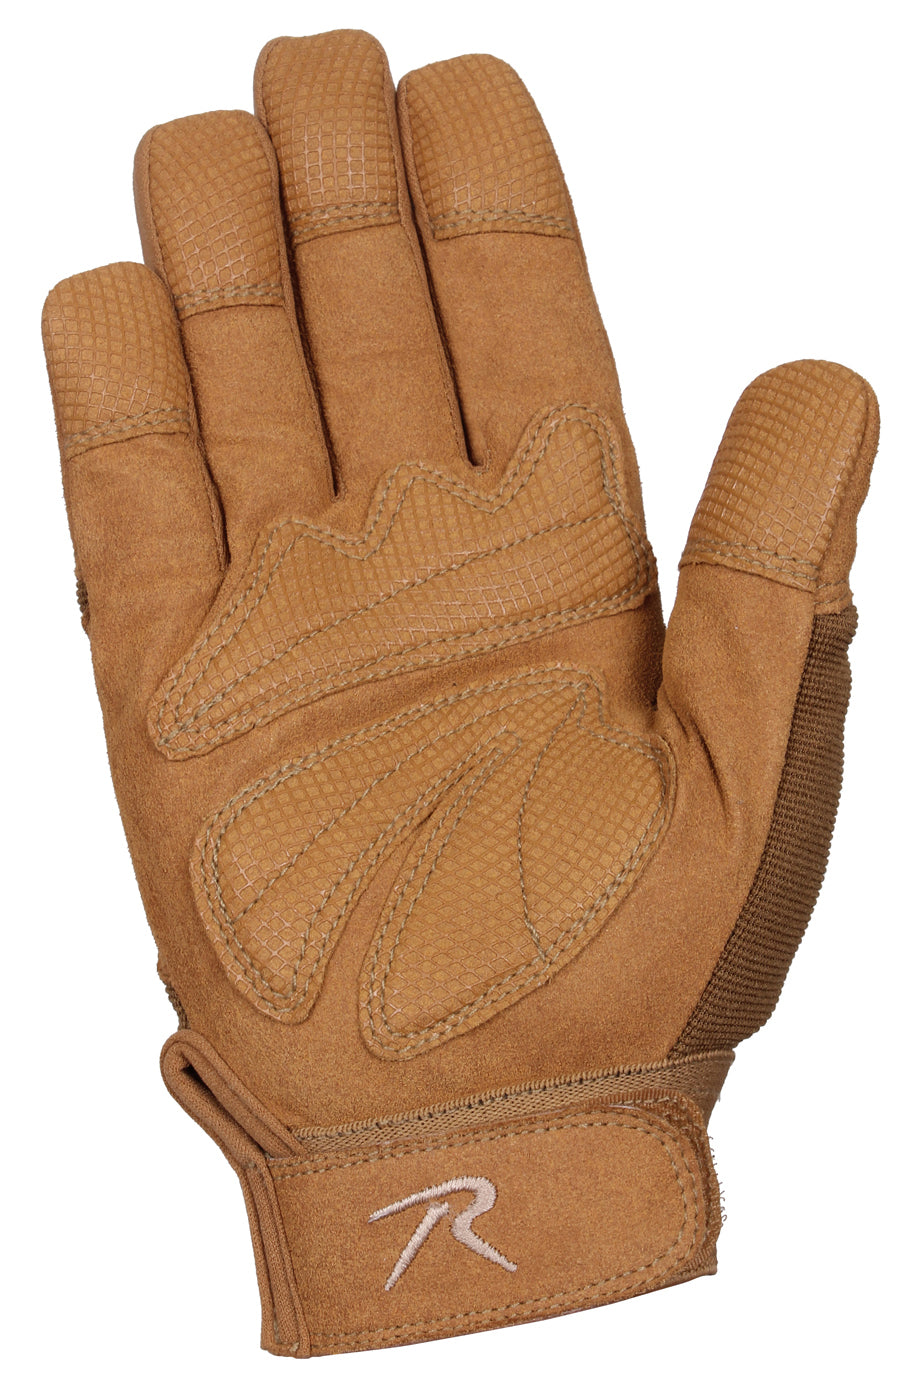 Mens Coyote GI Style Mechanics Gloves - Rothco Tactical Work Field Duty